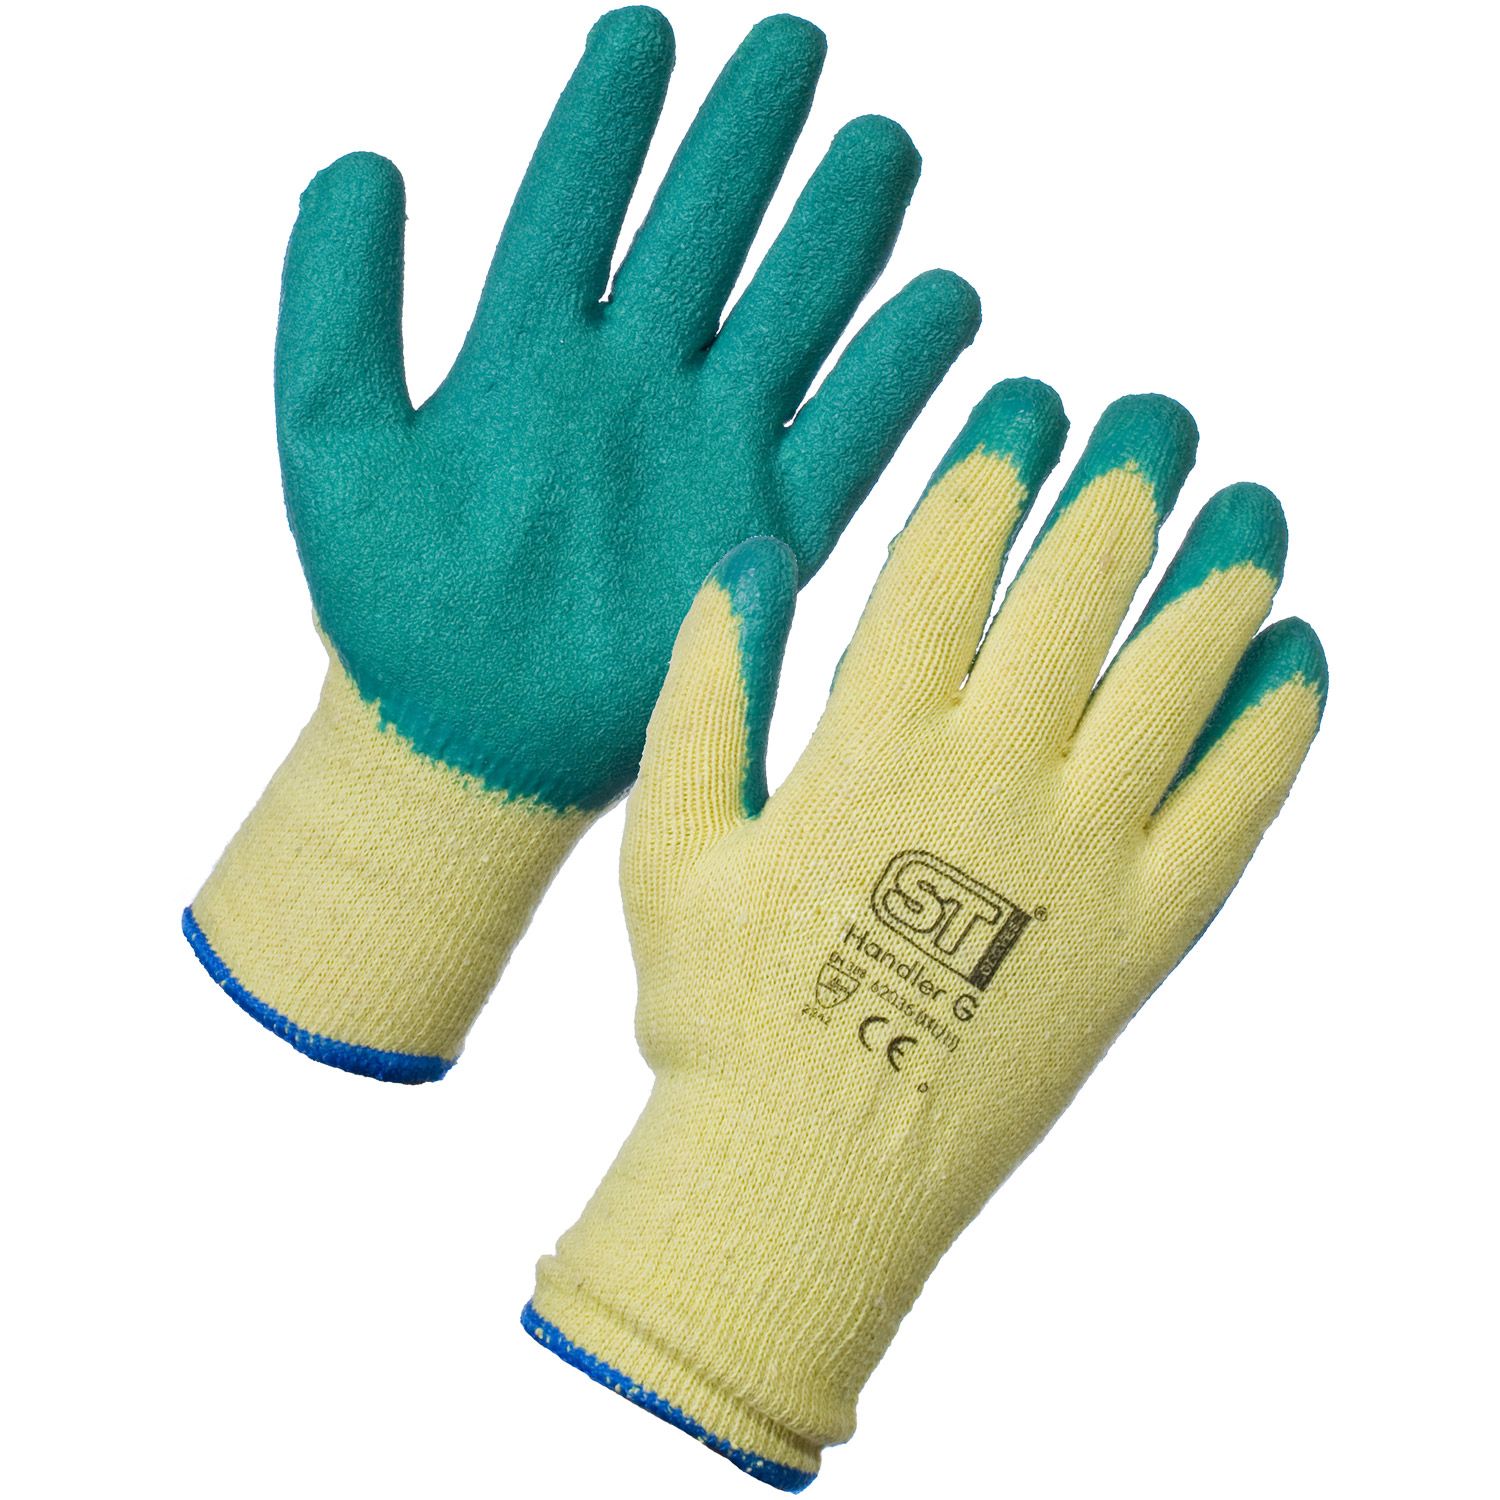 General Handler glove Latex coated (Green) - L - 12 Pack